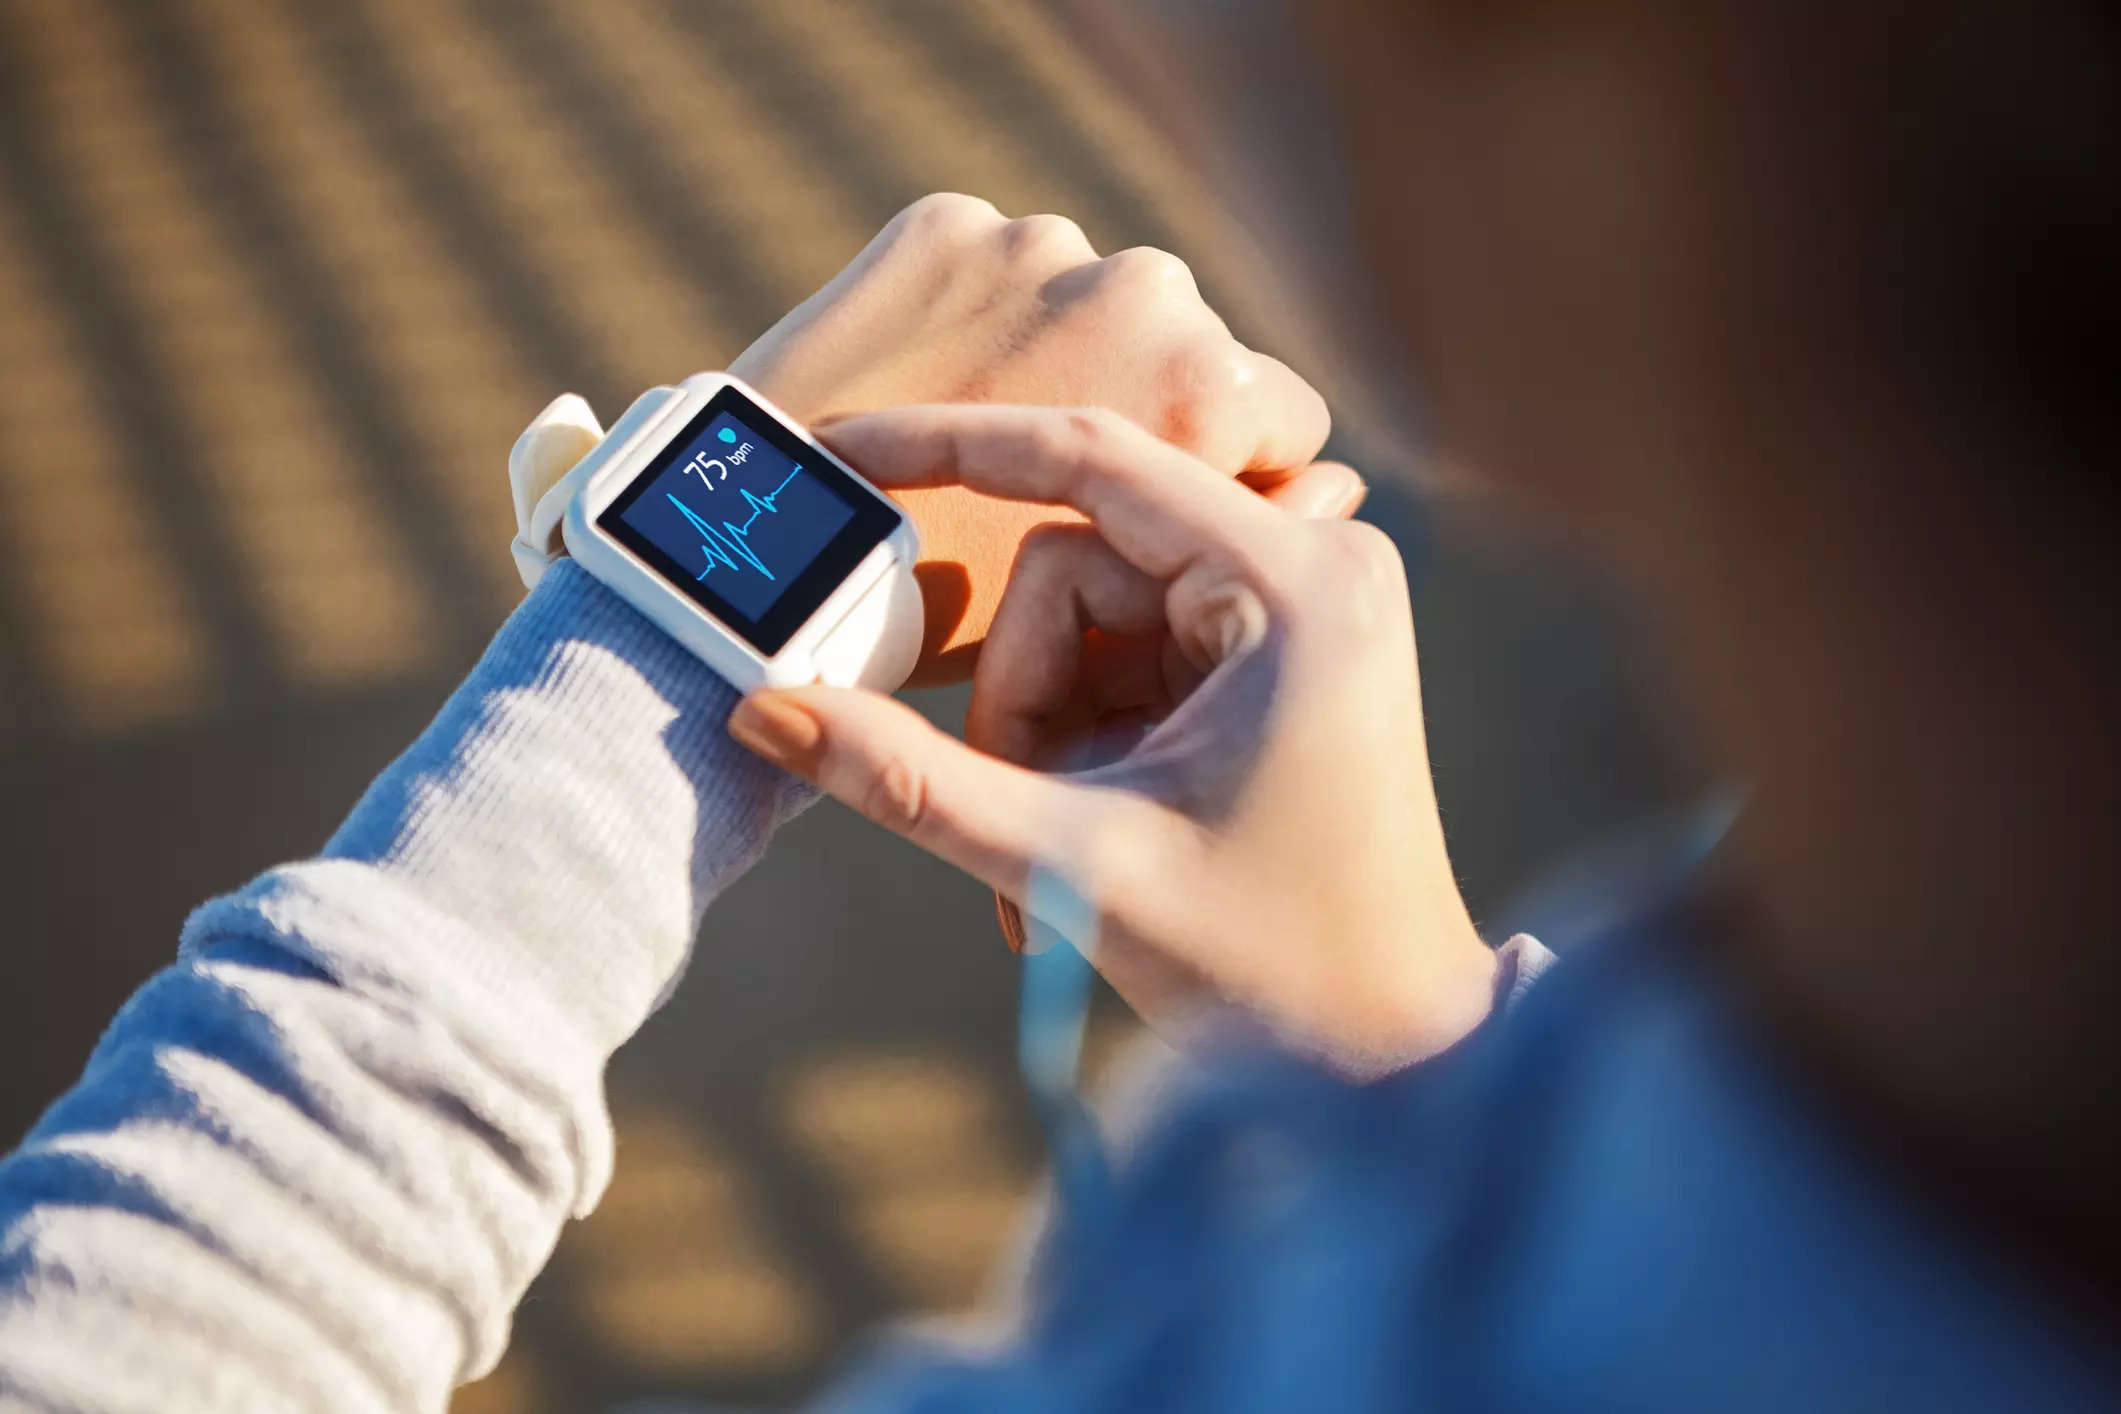 Apple Watch can help detect silent heart disease, reveals study